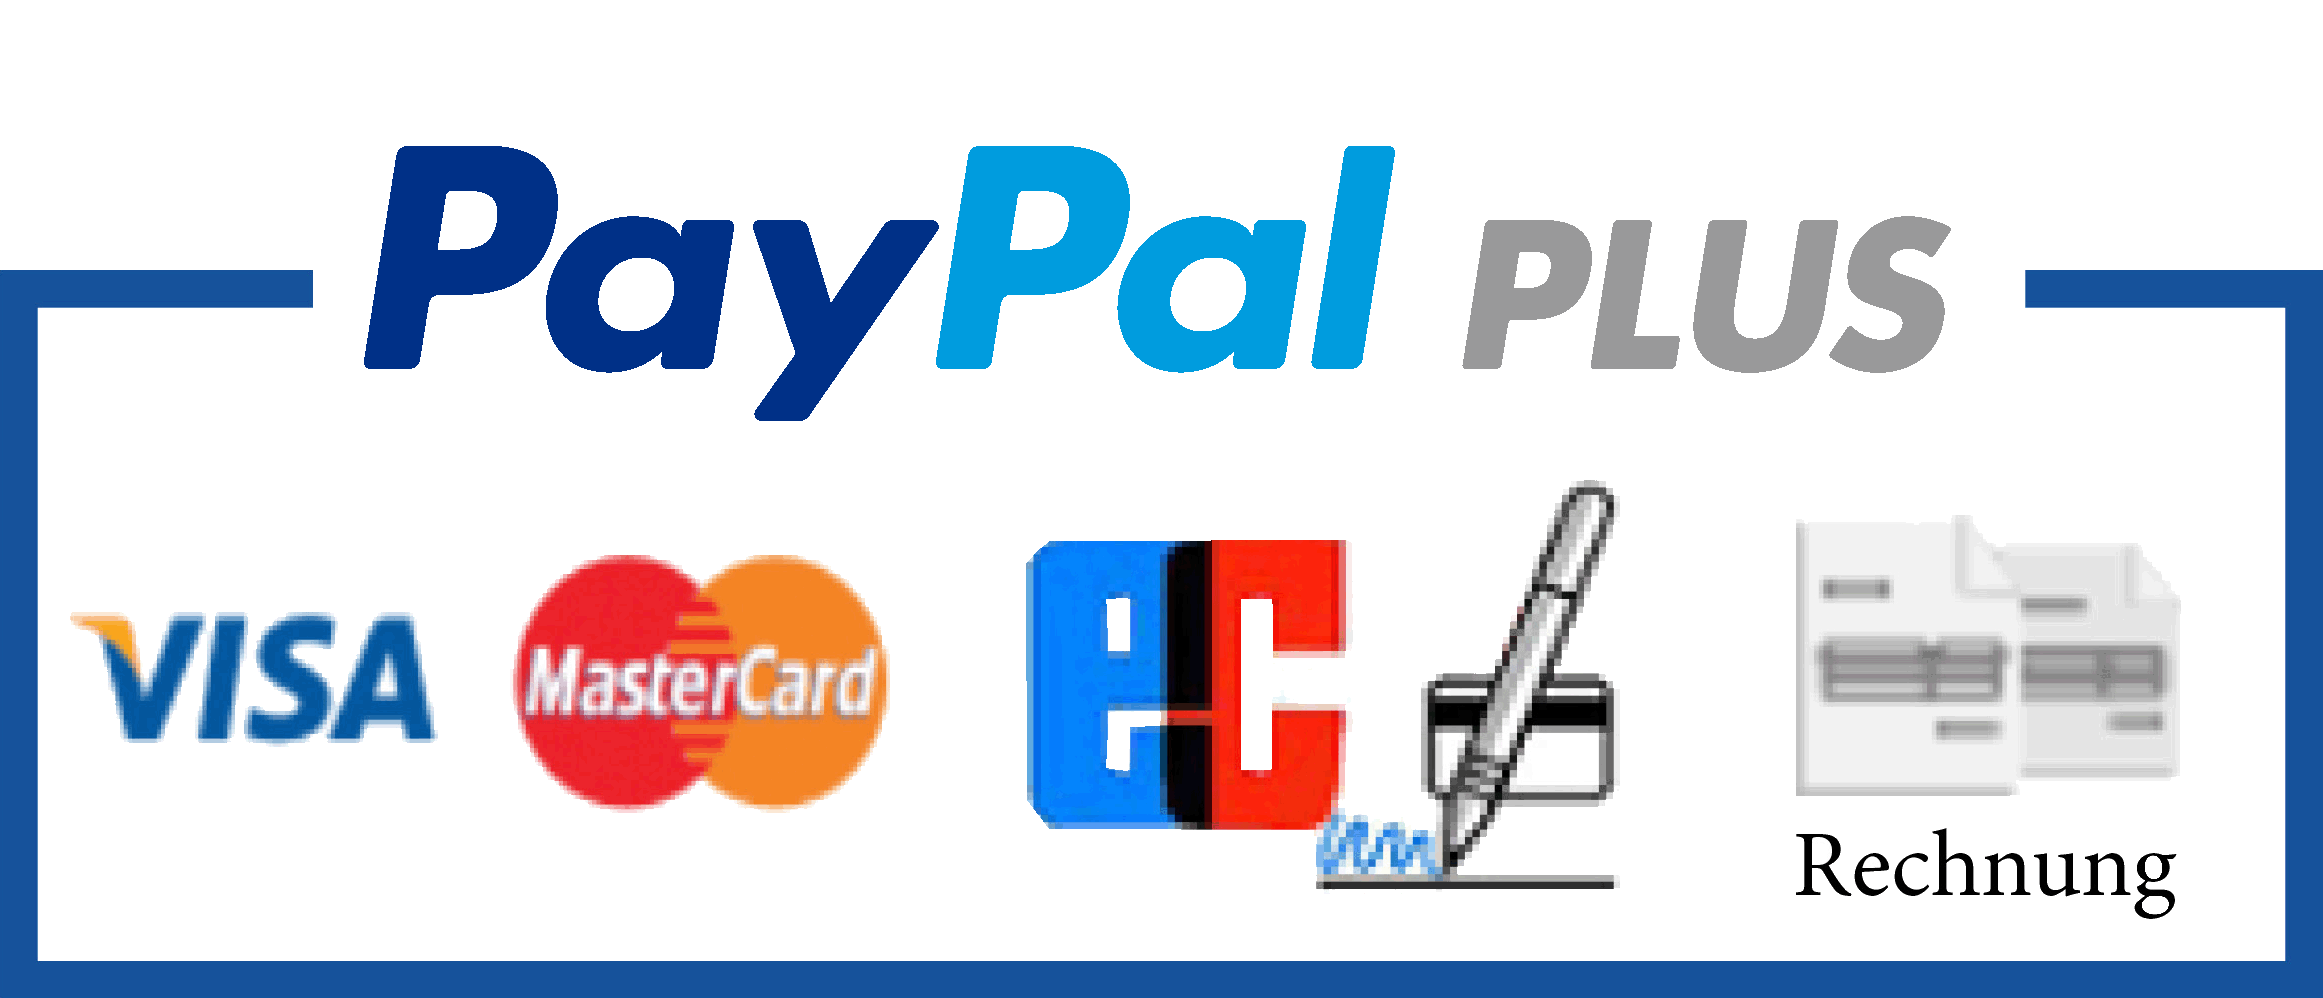 paypalplus